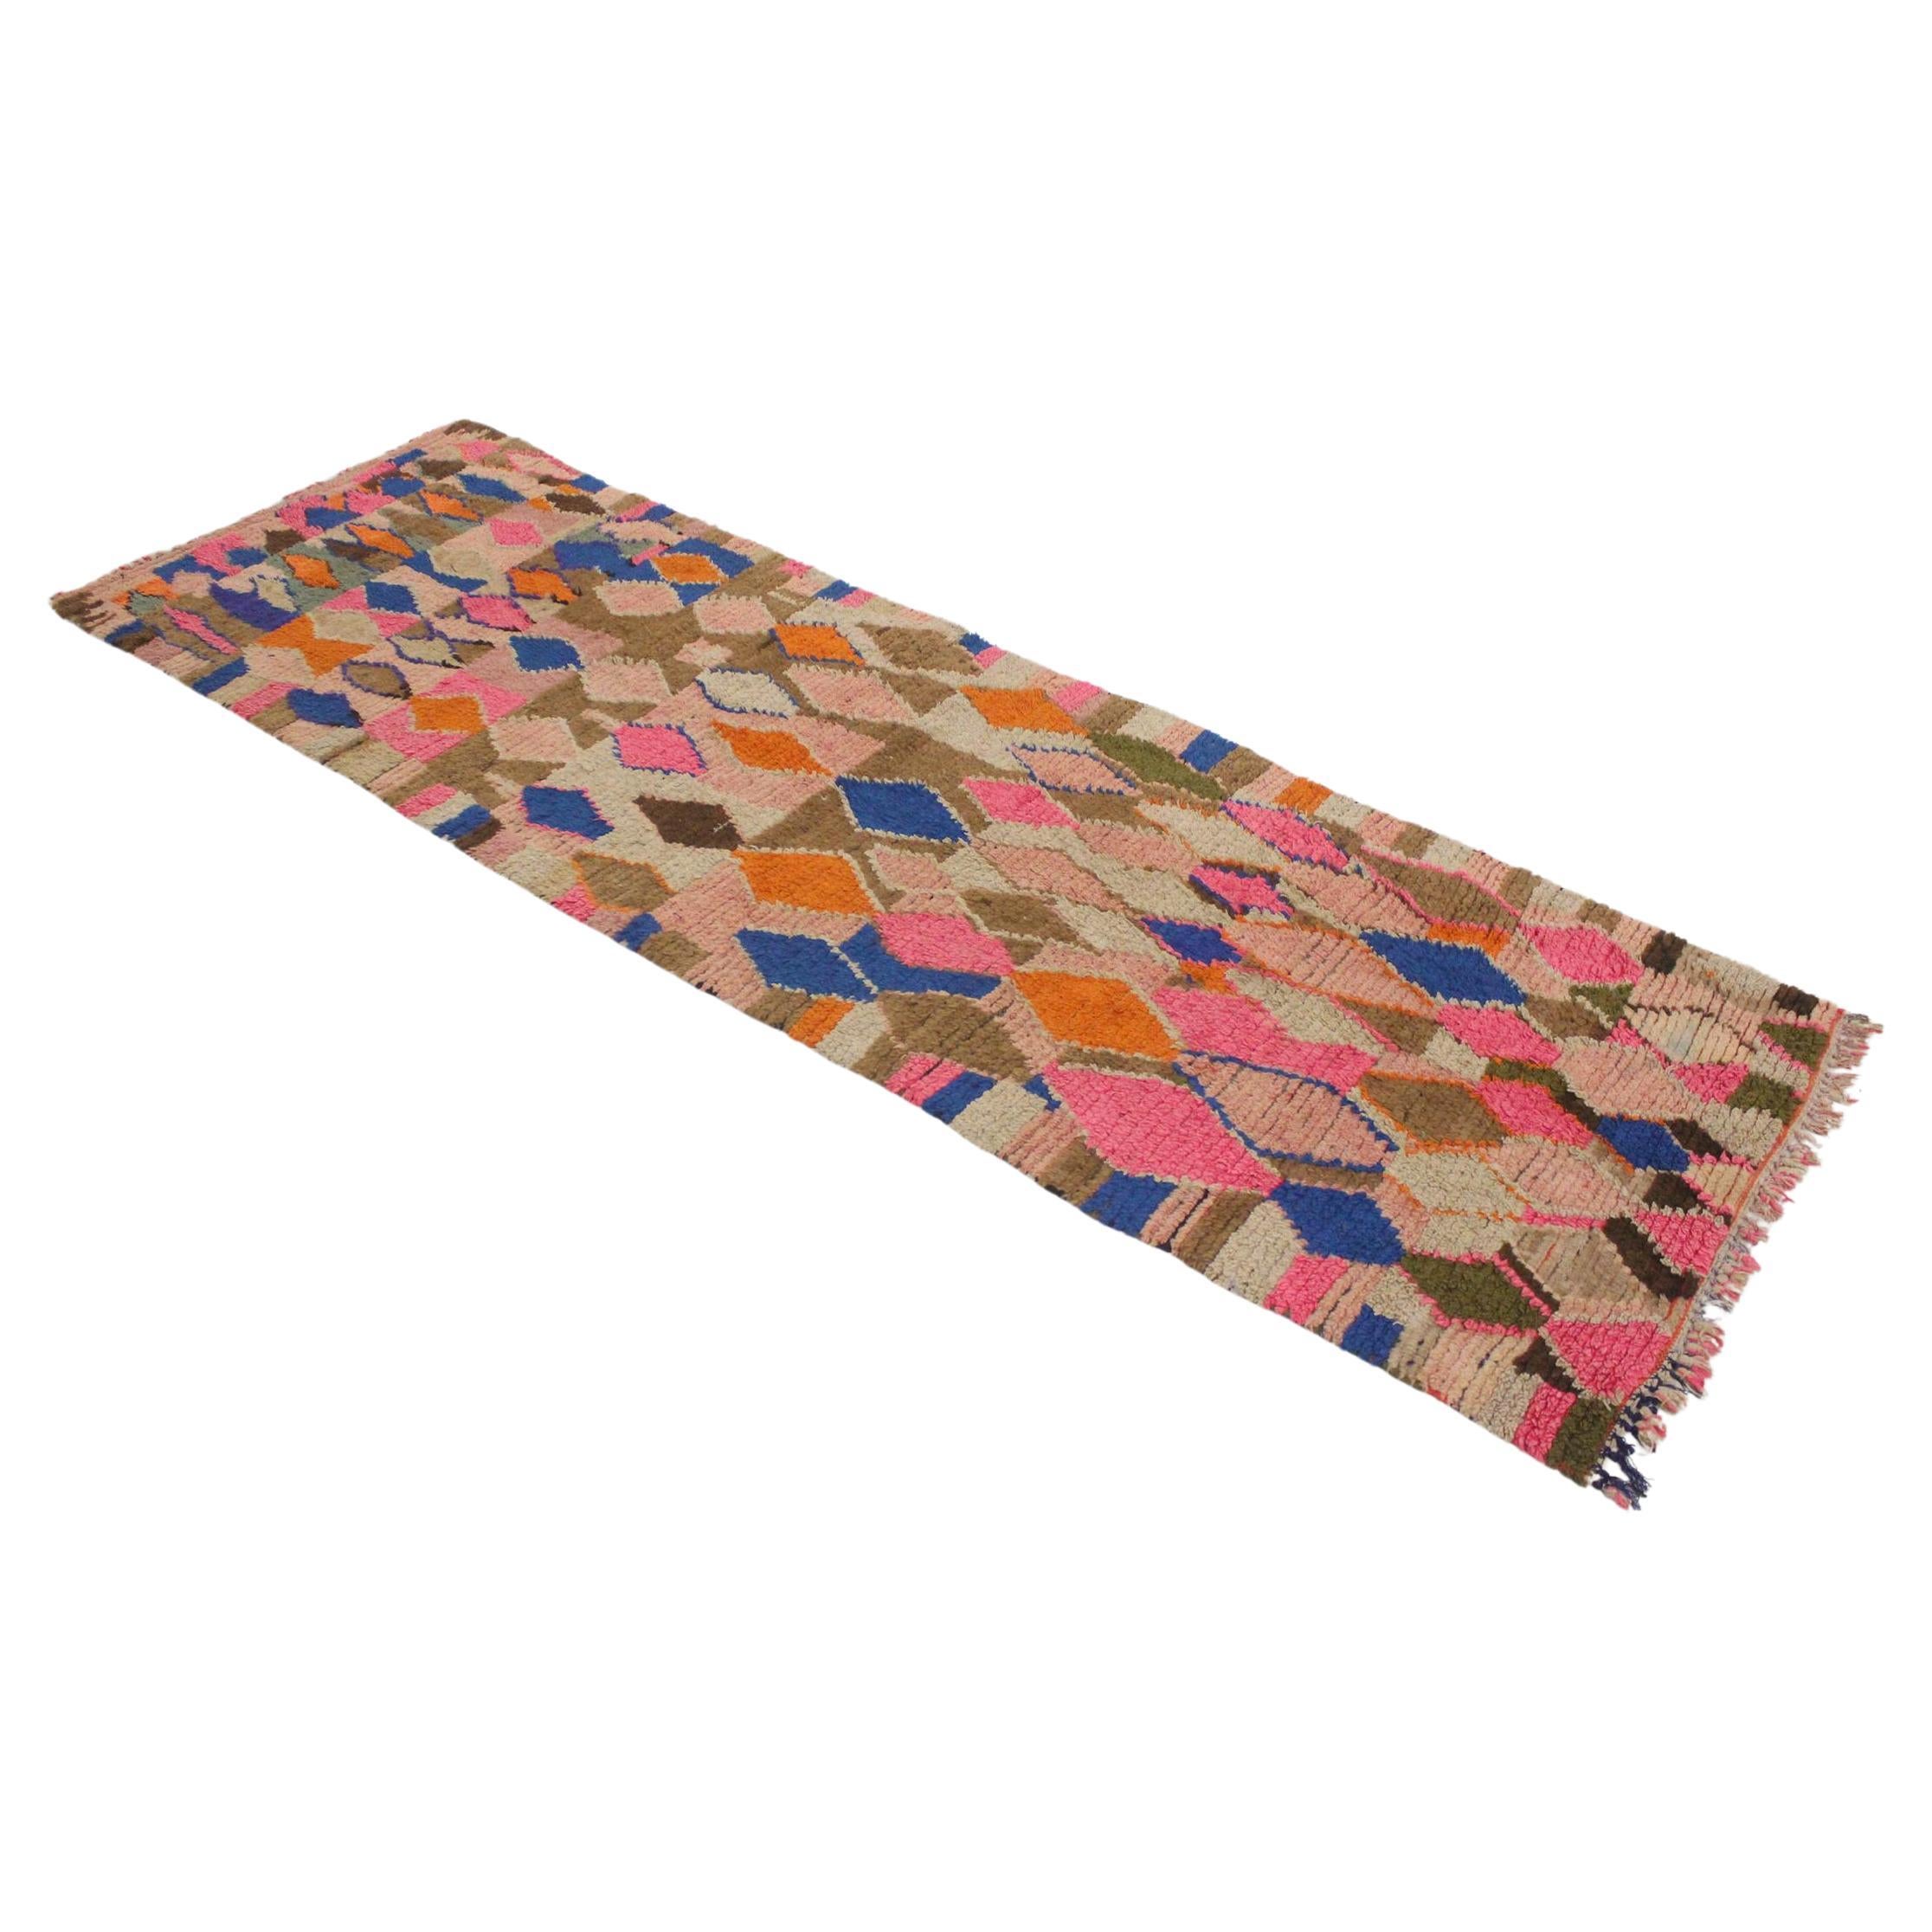 Vintage Moroccan Boujad runner rug - Pink/brown/blue - 3.2x10feet / 97x307cm For Sale